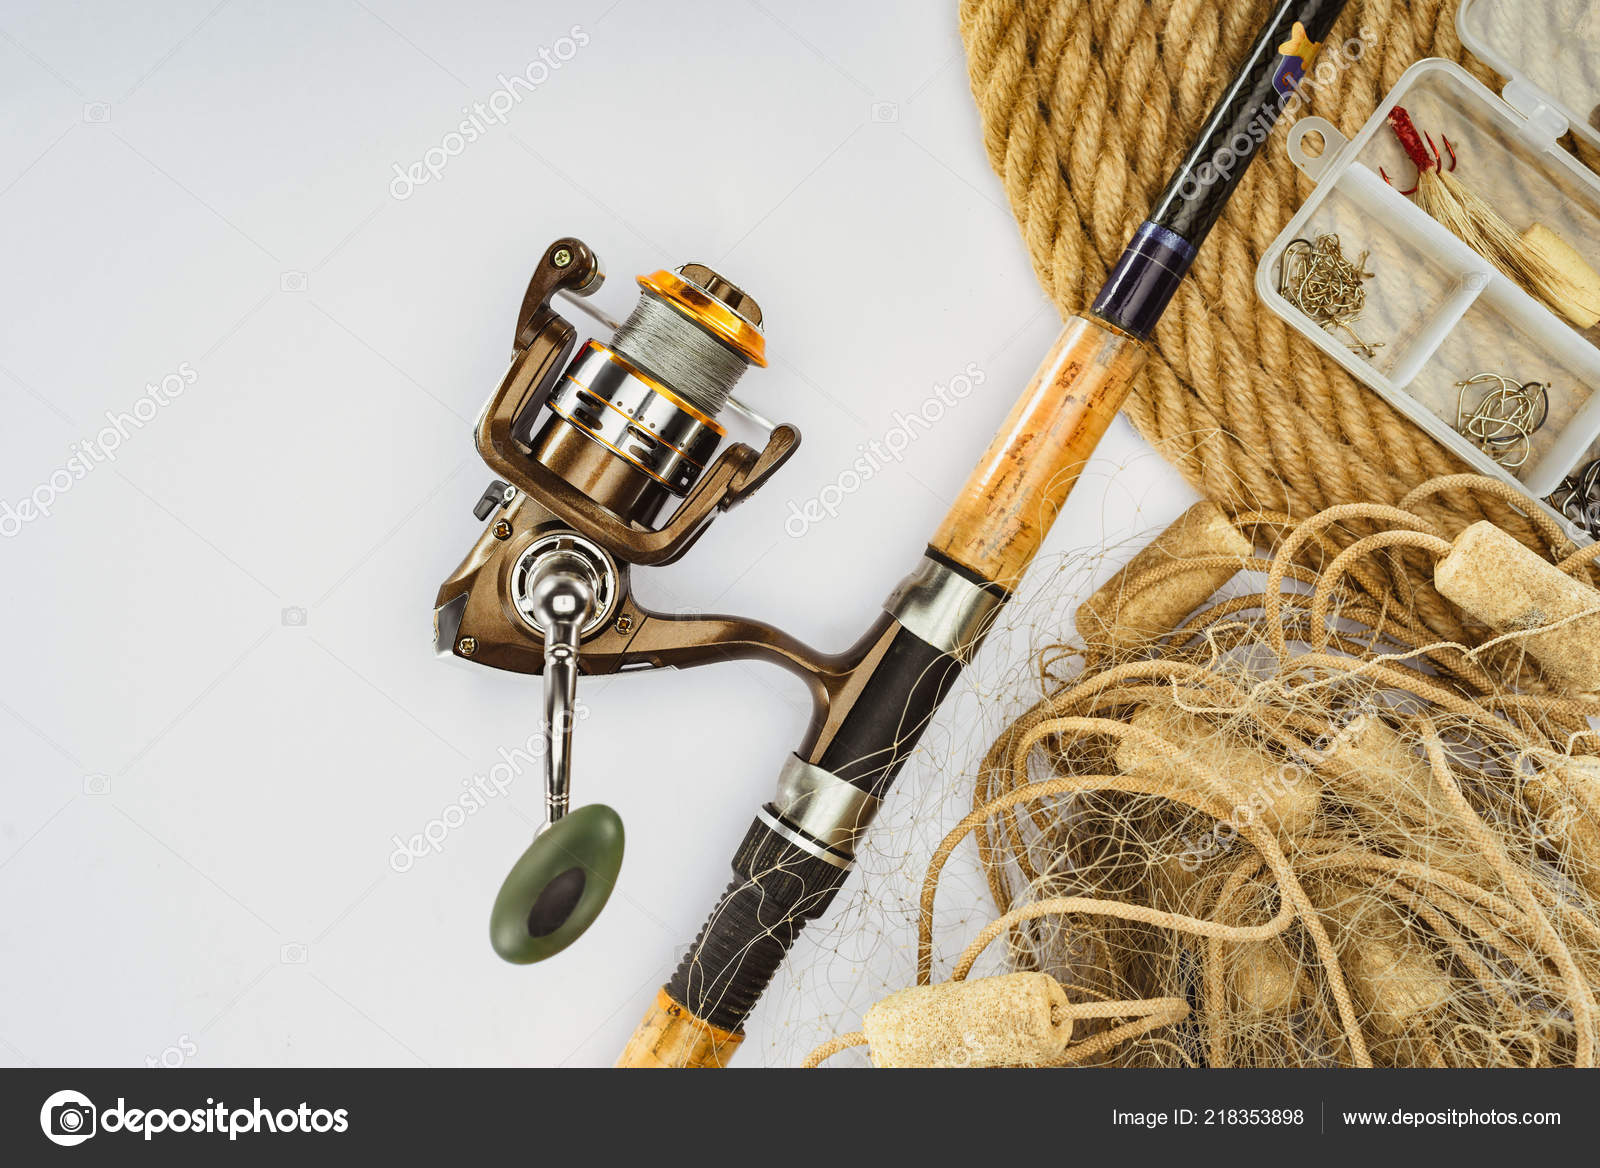 https://st4.depositphotos.com/13324256/21835/i/1600/depositphotos_218353898-stock-photo-top-view-fishing-rod-nautical.jpg